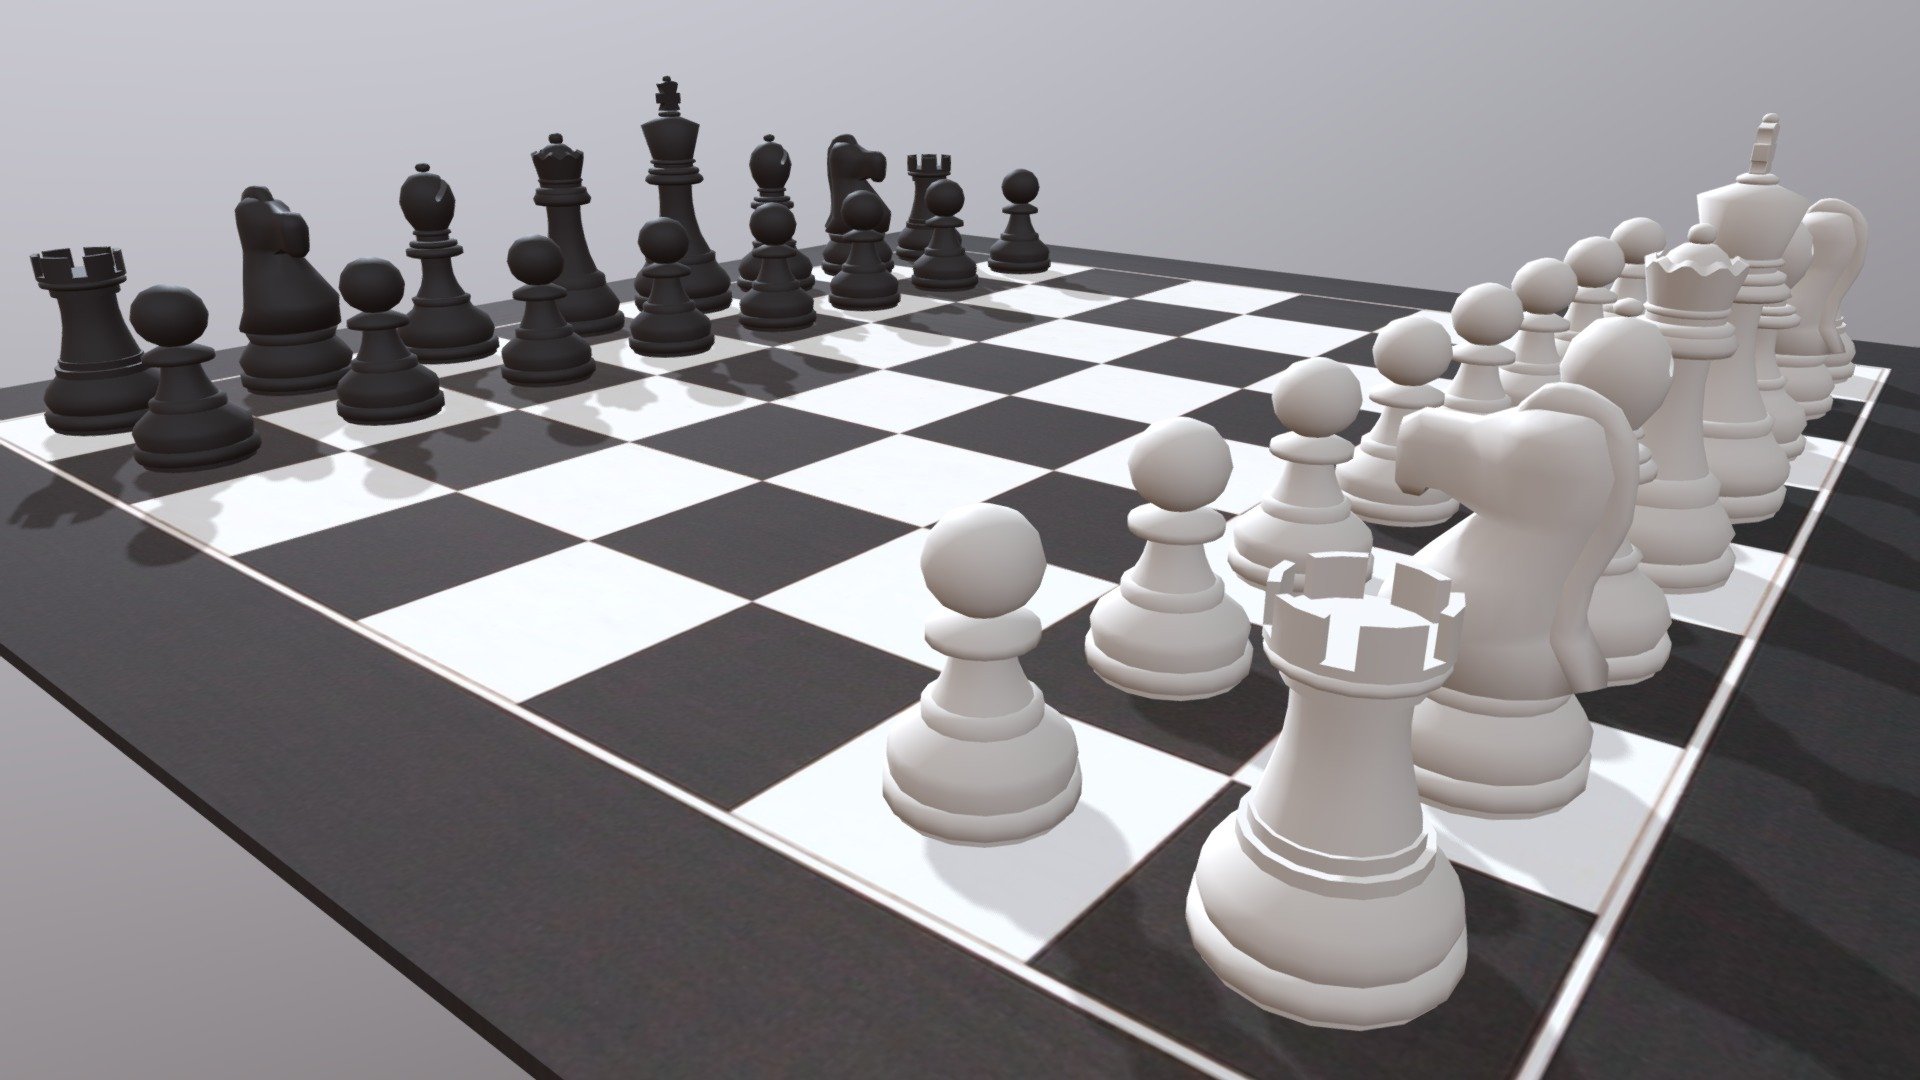 Chess Free 3D Model in Board Games 3DExport